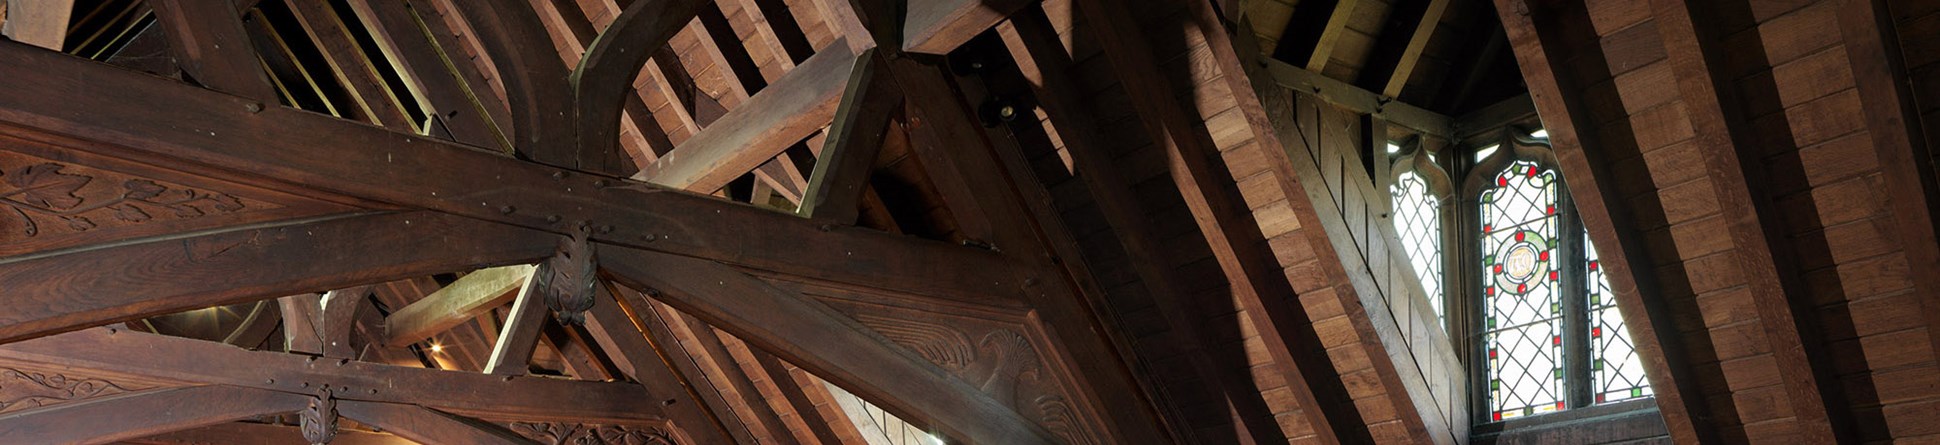 Interior of wooden church